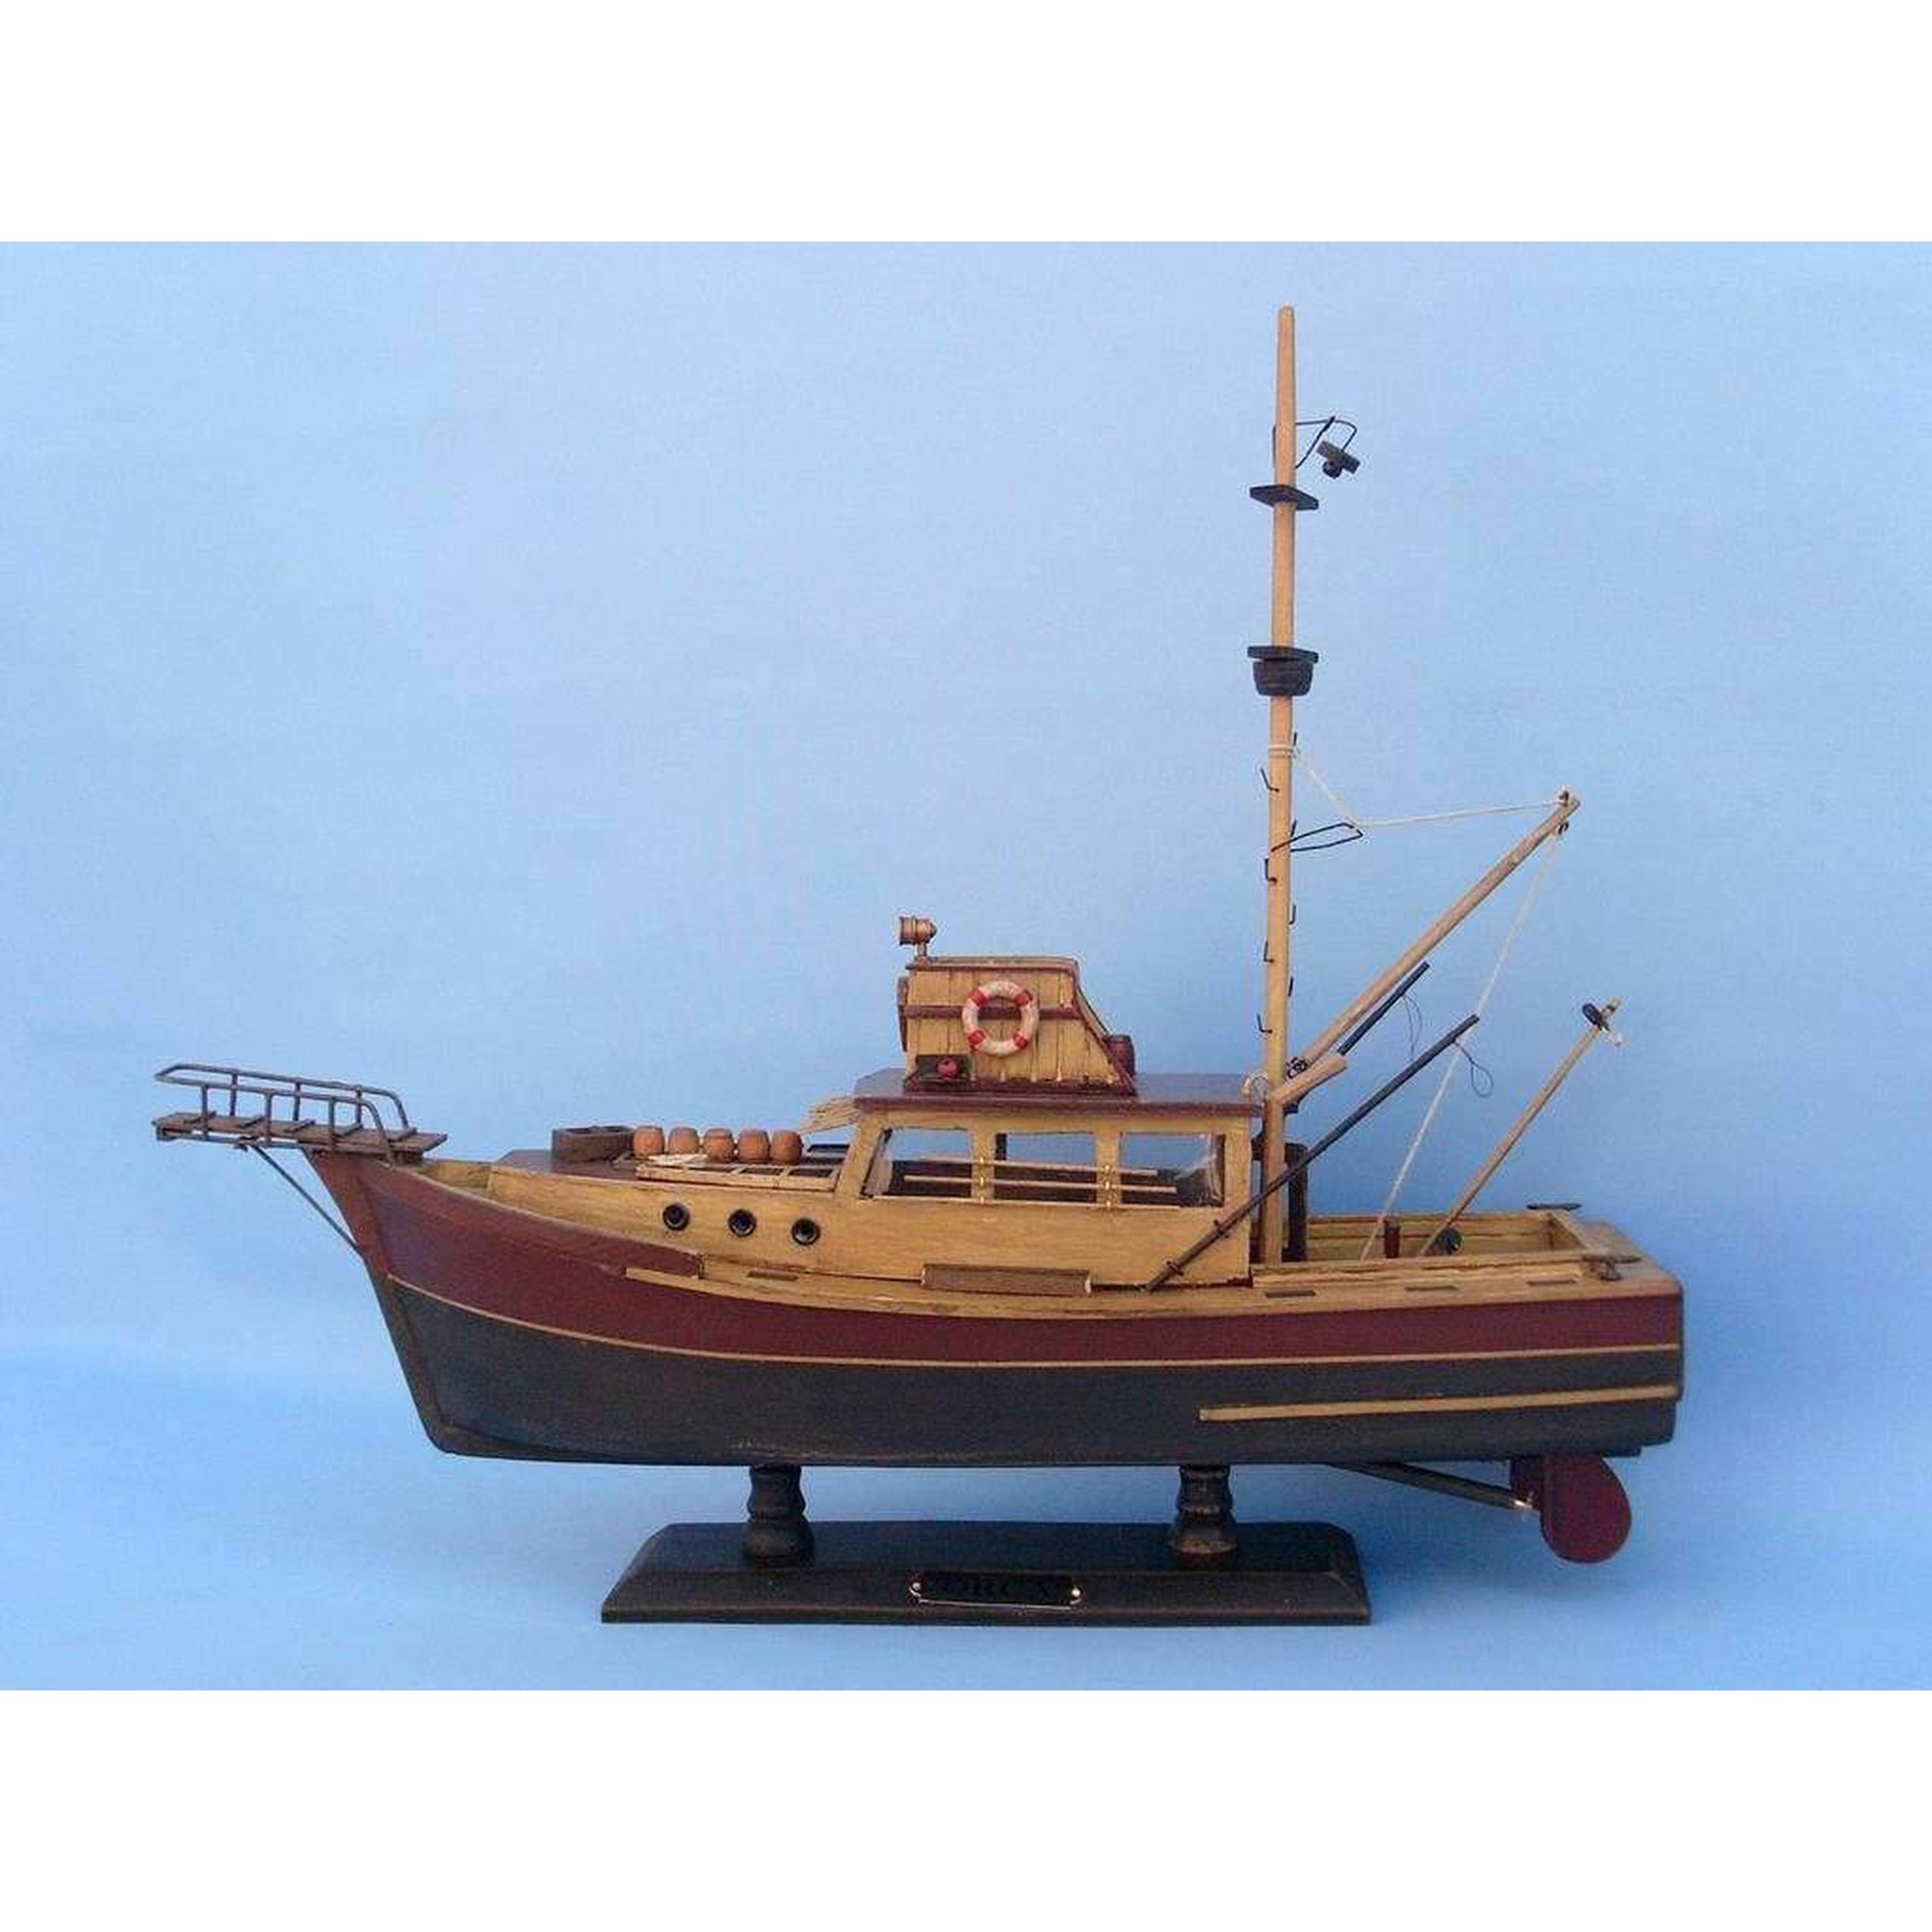 Buy Wooden Jaws - Orca Model Boat 20" – Adama Model Ships